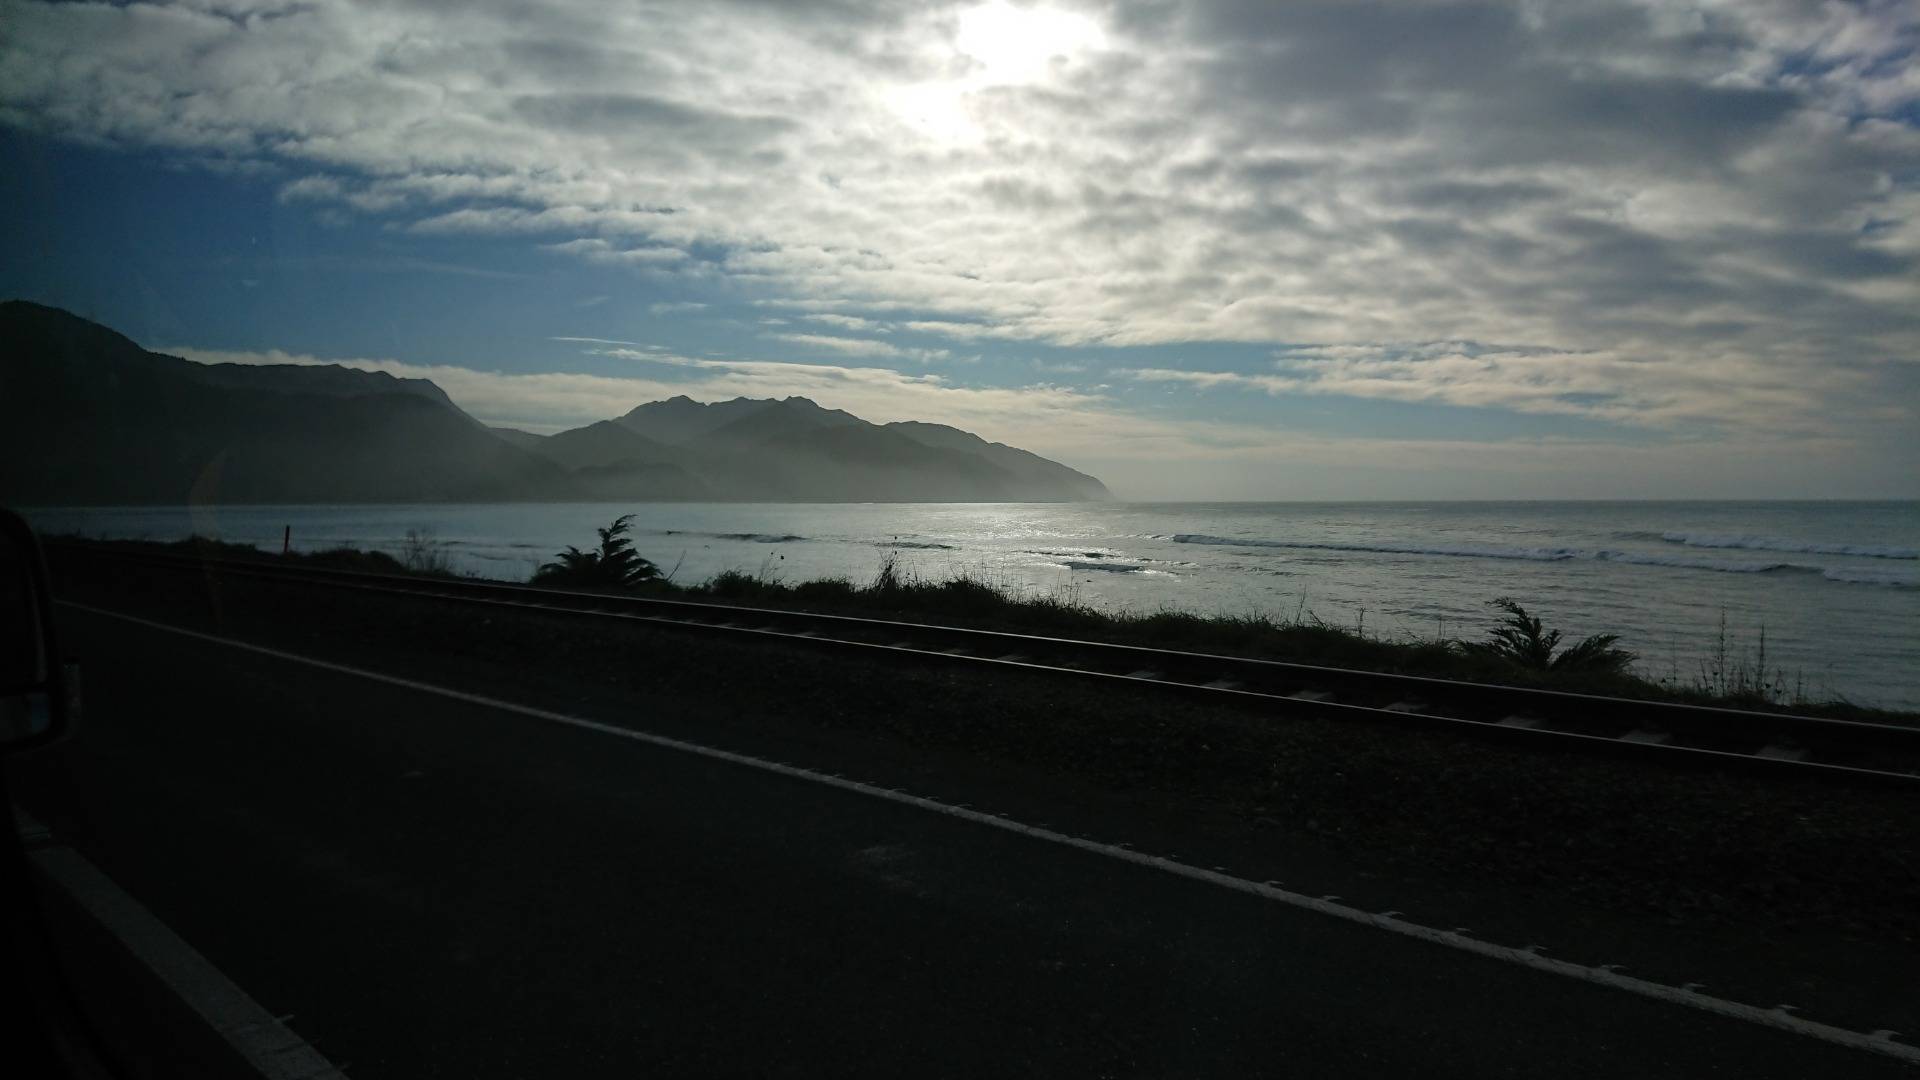 Great views as you drive around the coastline towards Kaikoura